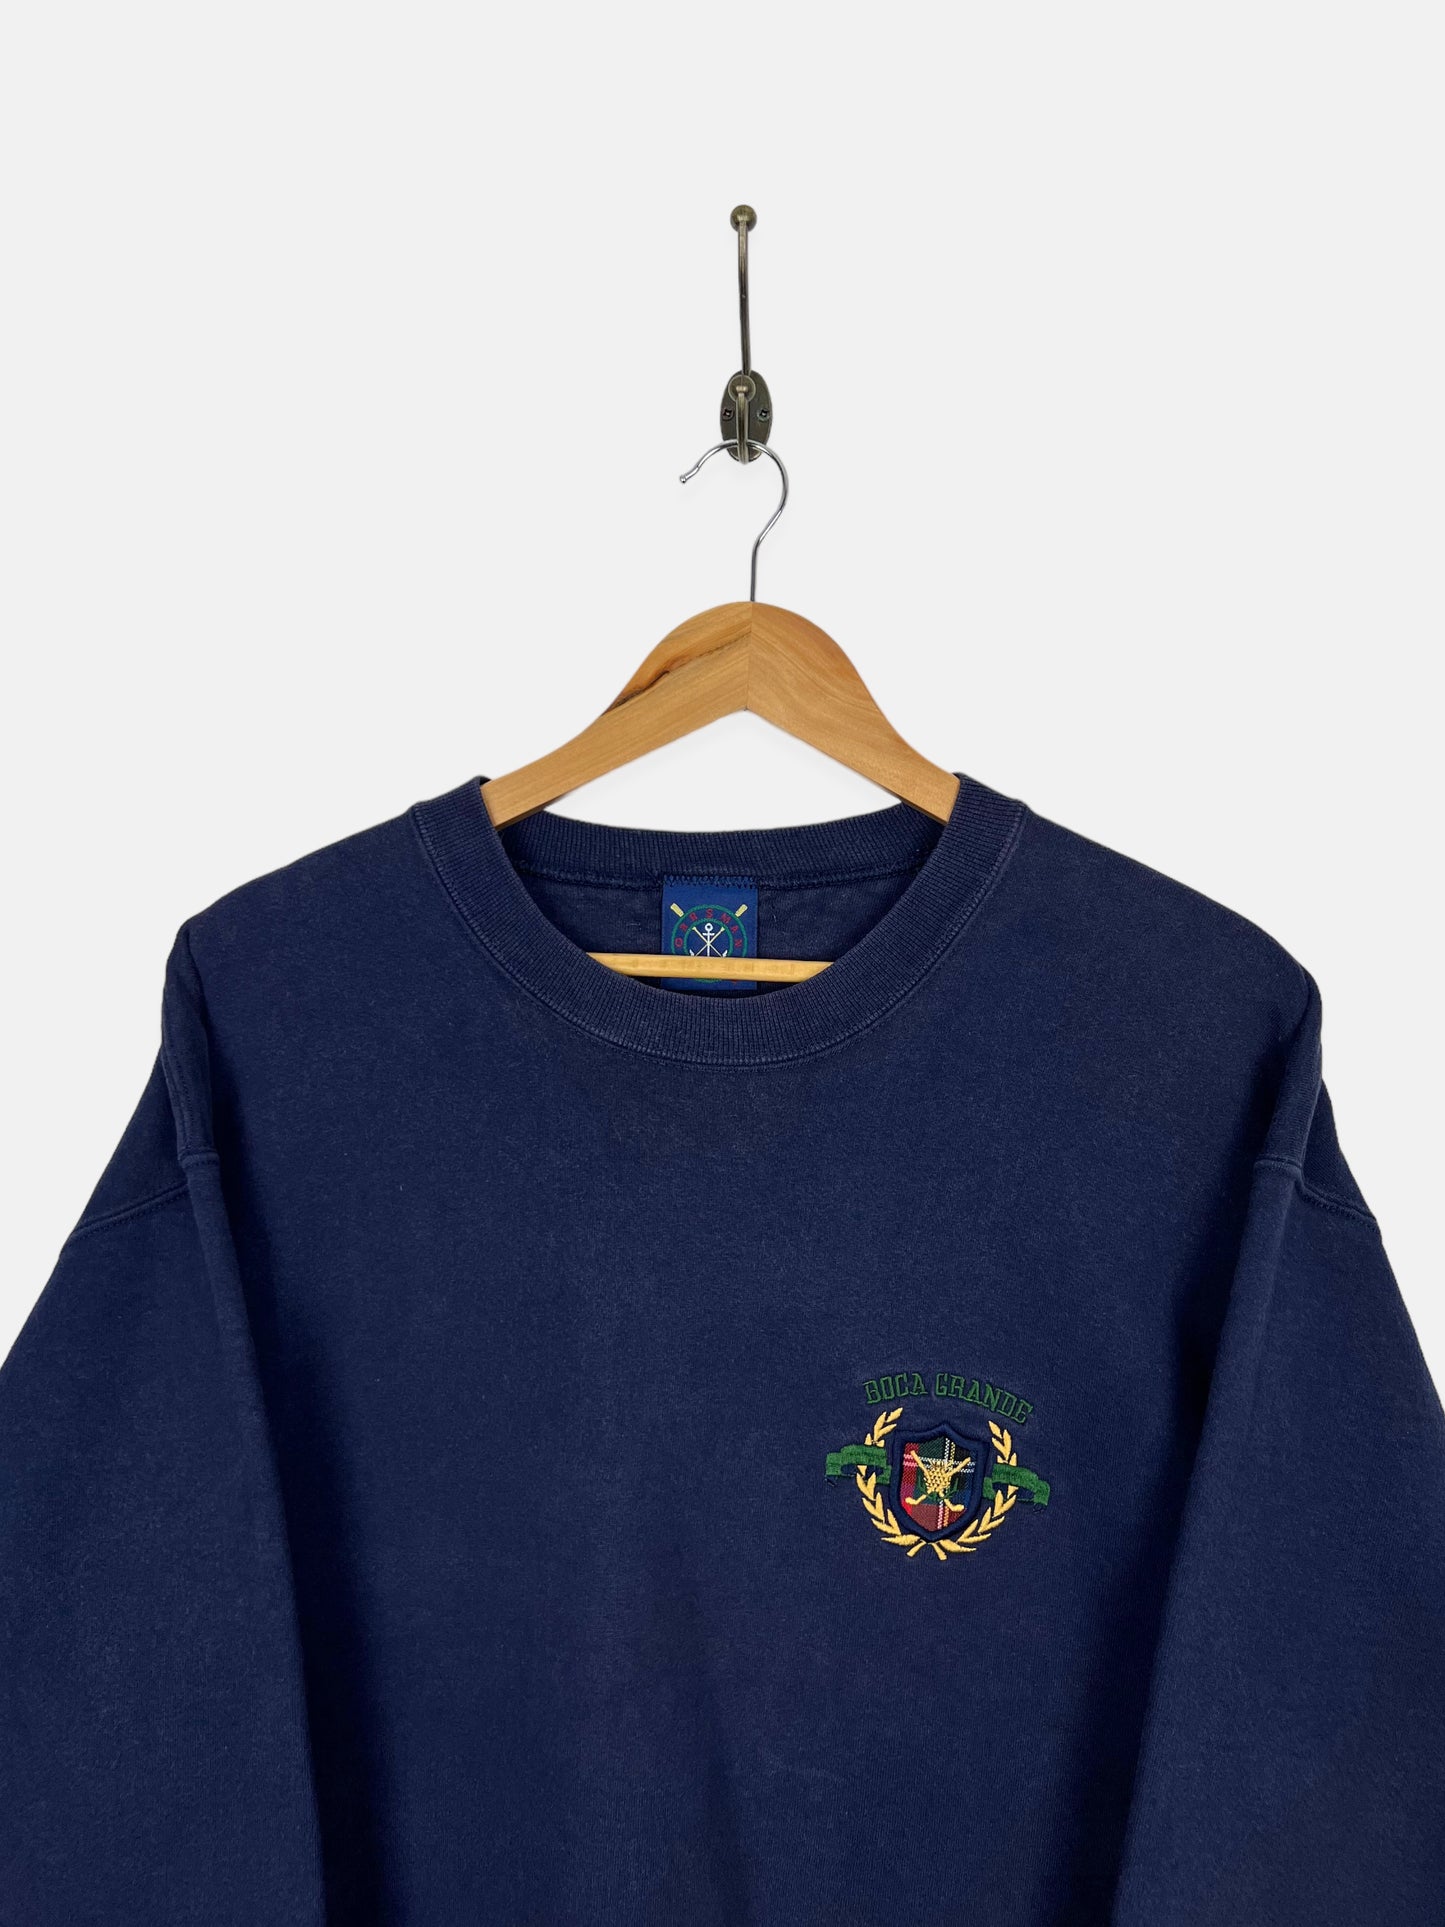 90's Boca Grande USA Made Embroidered Vintage Sweatshirt Size M